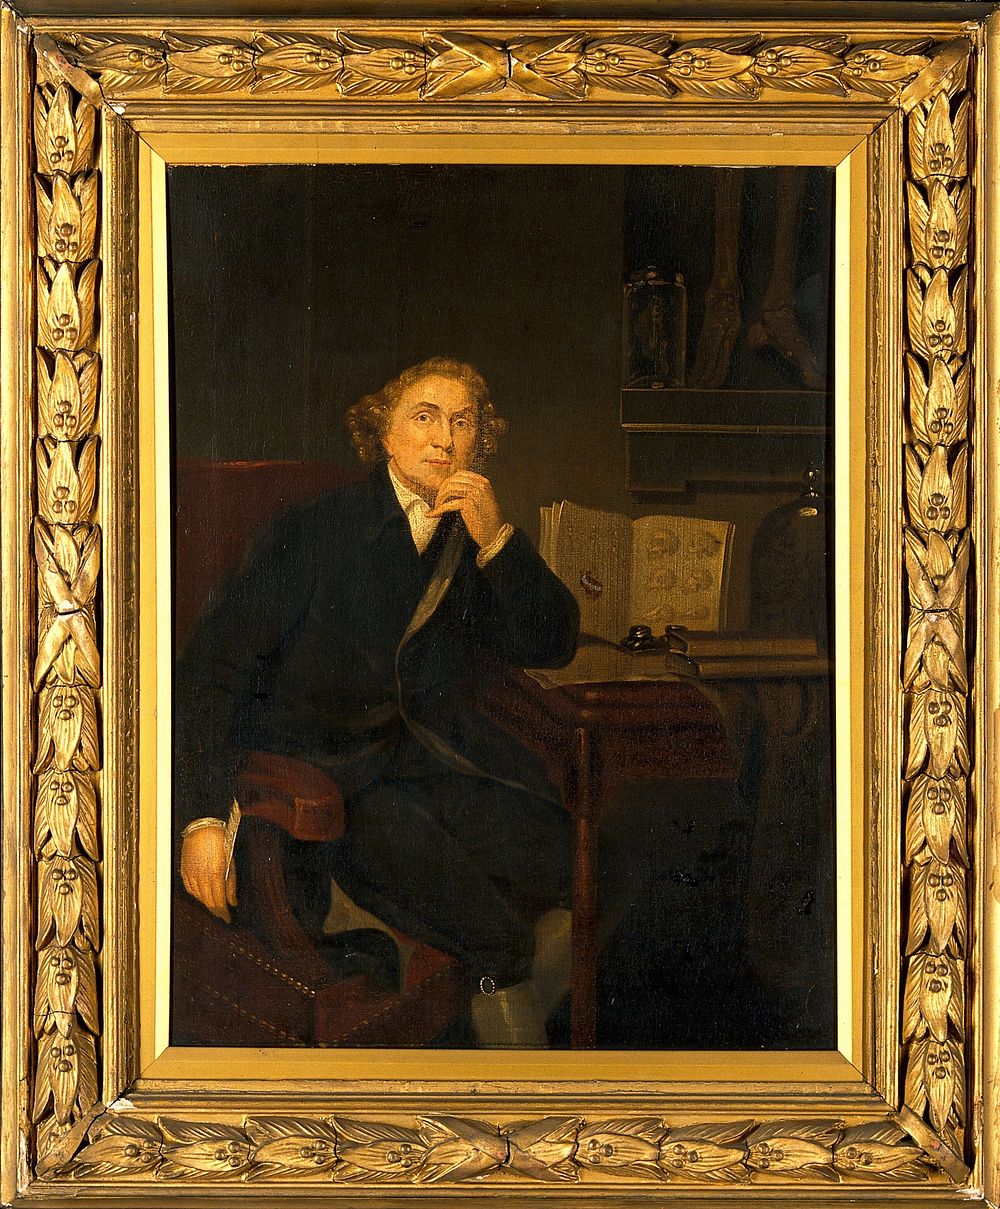 John Hunter (1728-1793), surgeon and anatomist. Oil painting after Sir Joshua Reynolds.